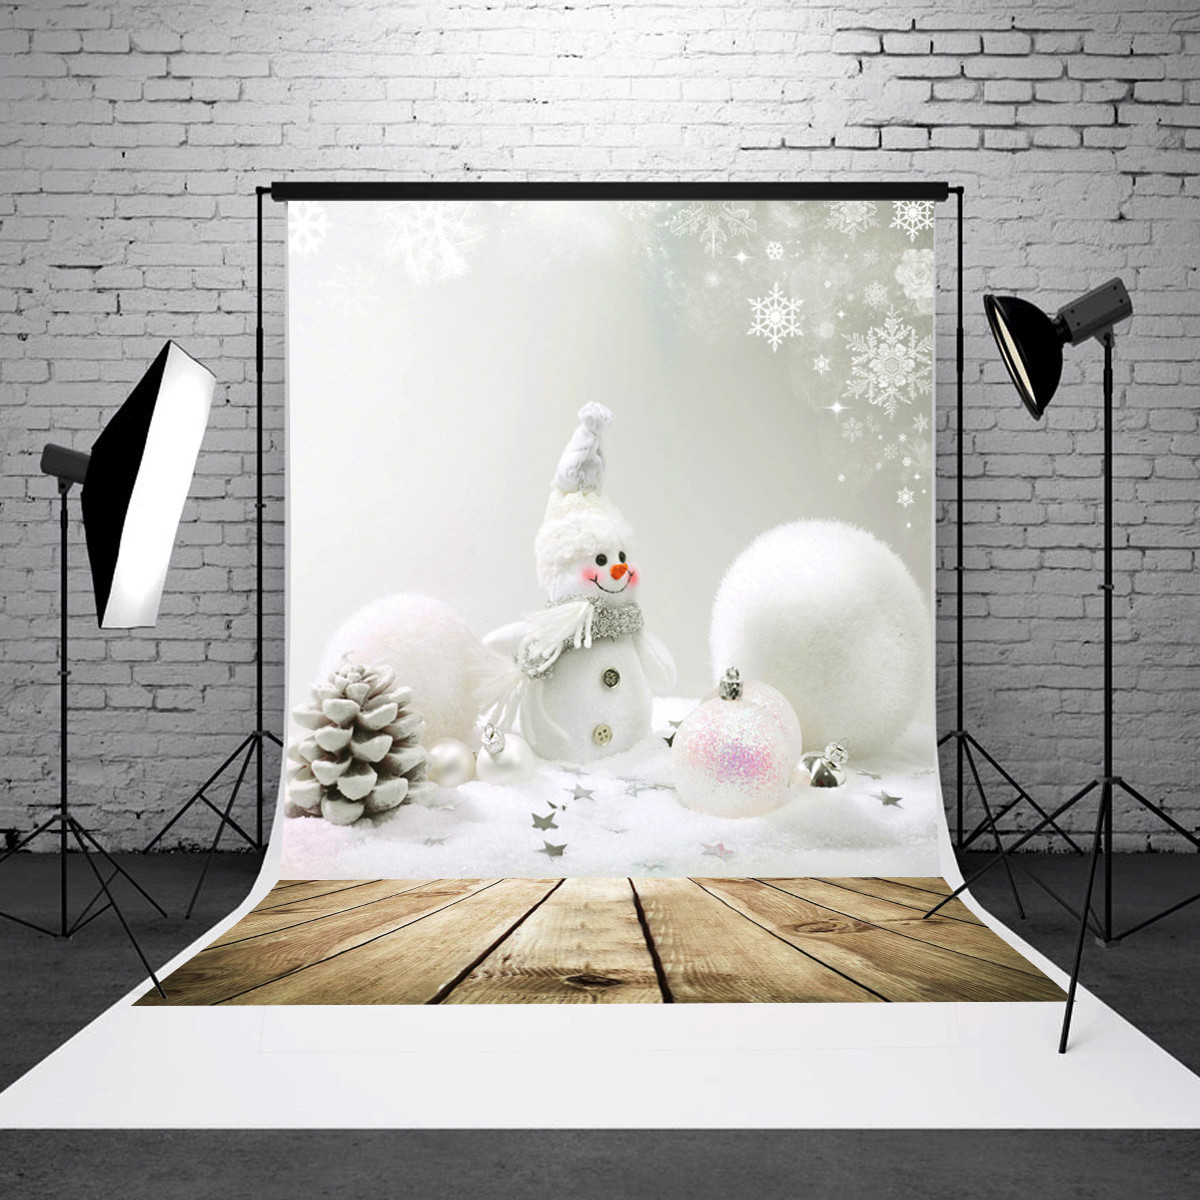 5x7ft Christmas Snowman Photography Backdrop